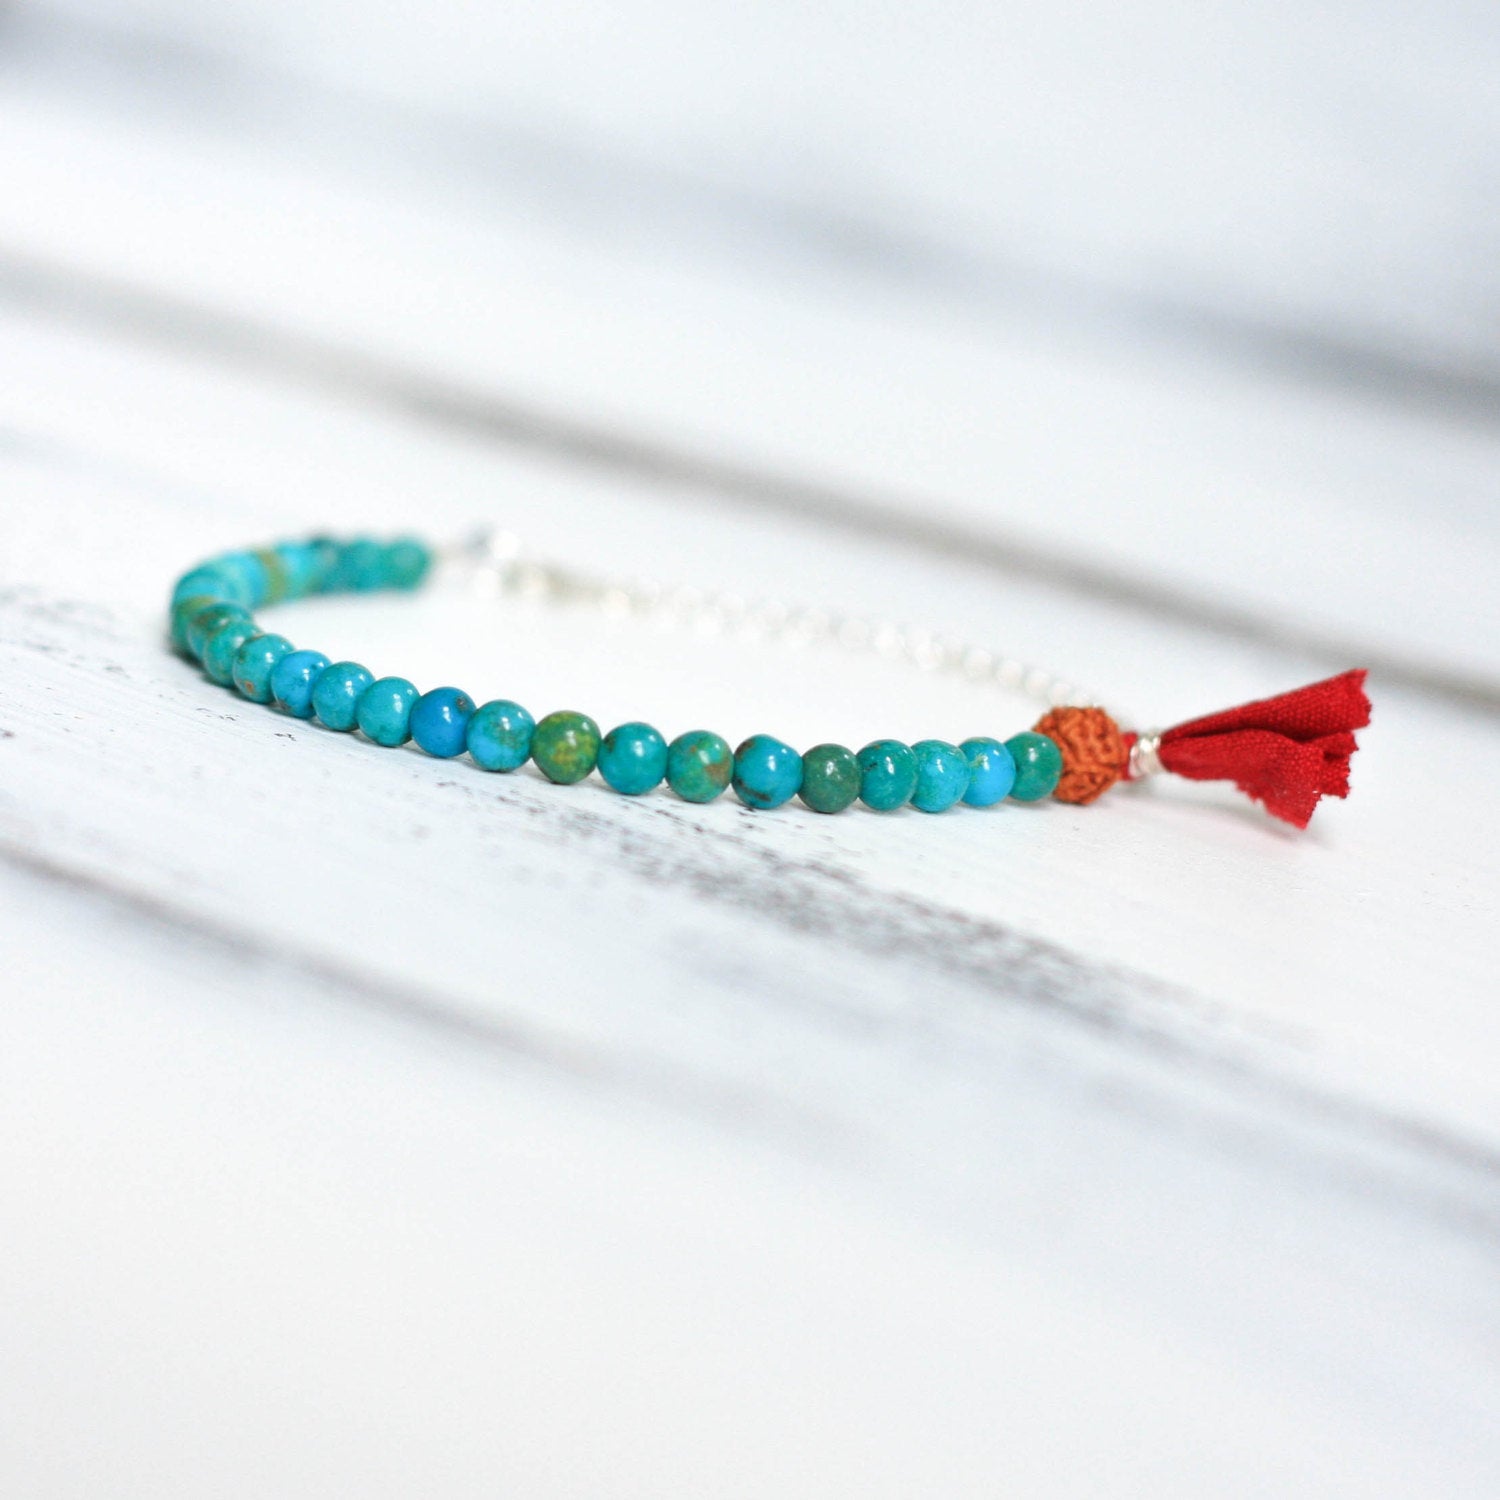 Turquoise small bead bracelet with tassel, boho jewelry